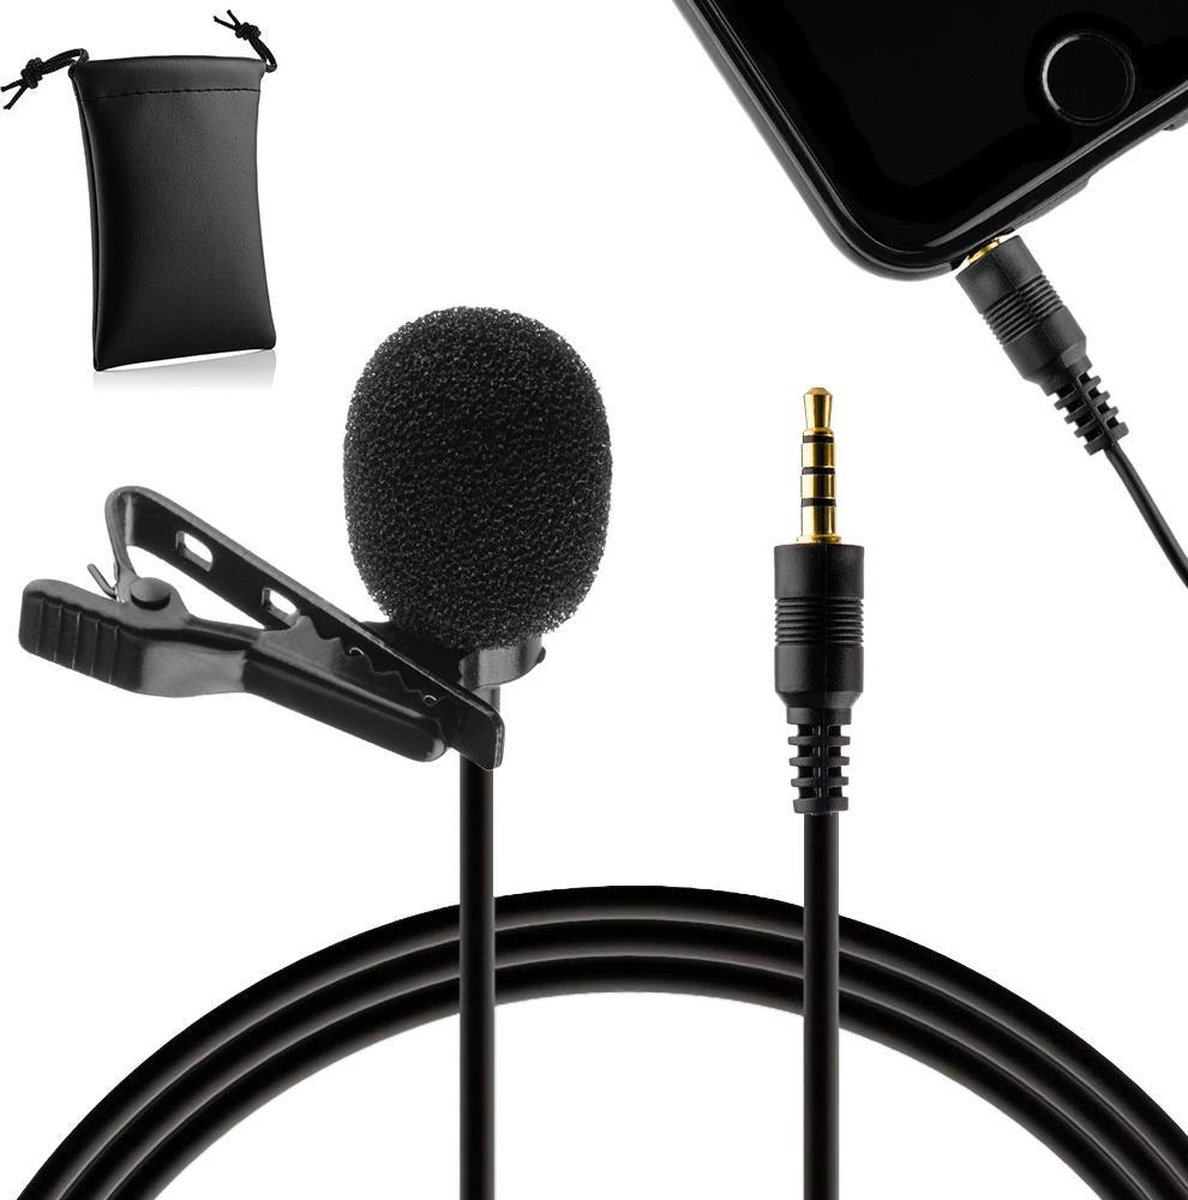 MOJOGEAR Speldmicrofoon voor Smartphones/Tablets/Telefoons - 1,5 meter kabel - 3.5 mm koptelefoon-aansluiting - Zwart - MOJOGEAR